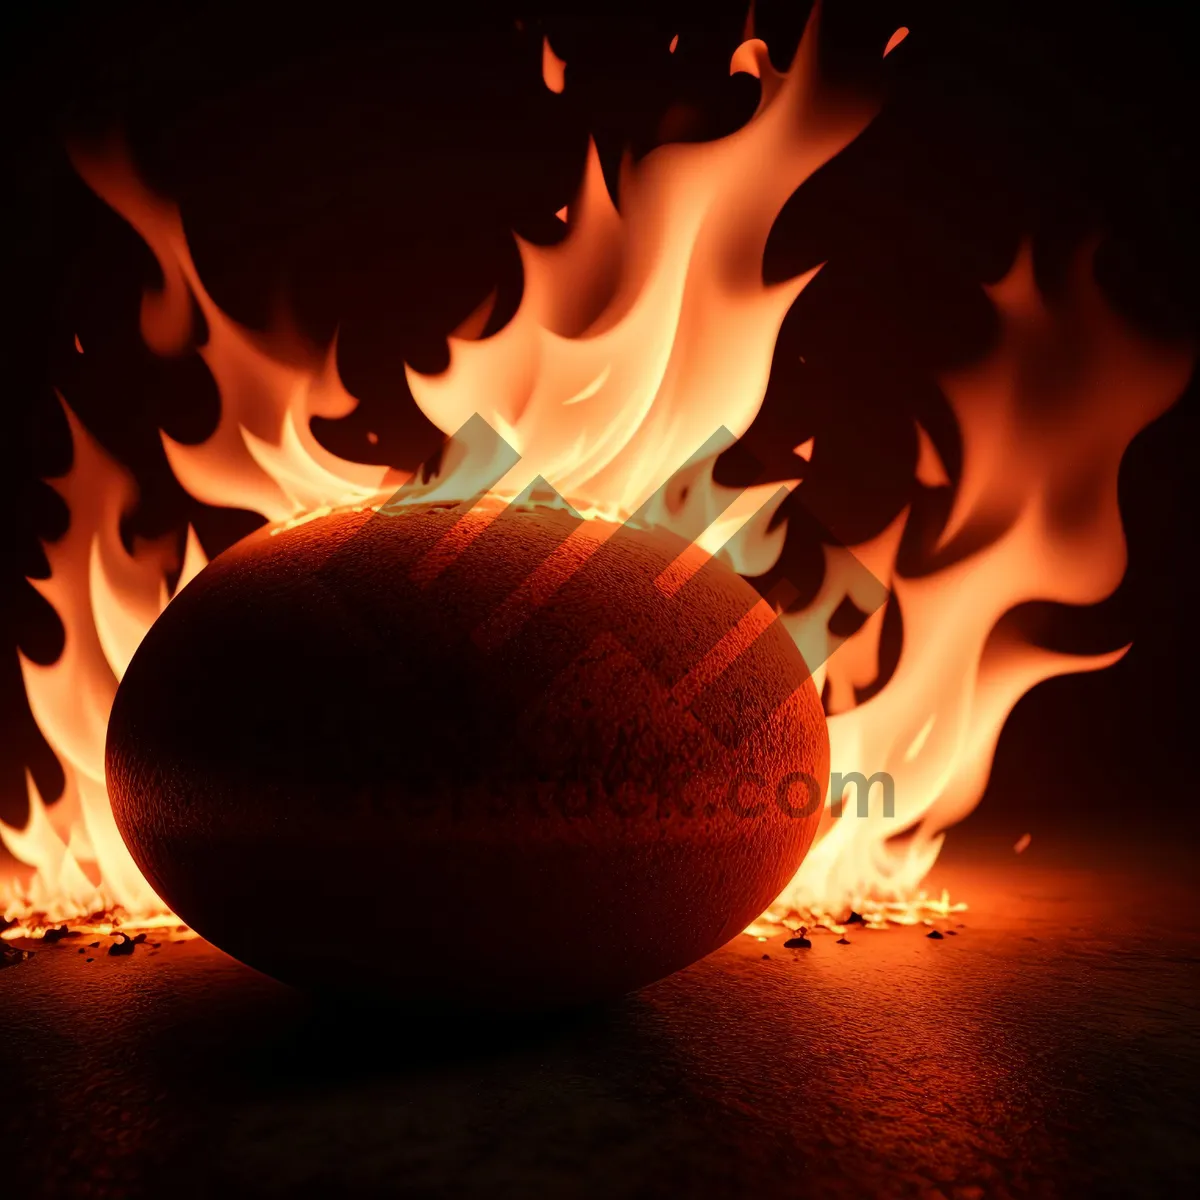 Picture of Fiery Blaze Illuminating the Dark.